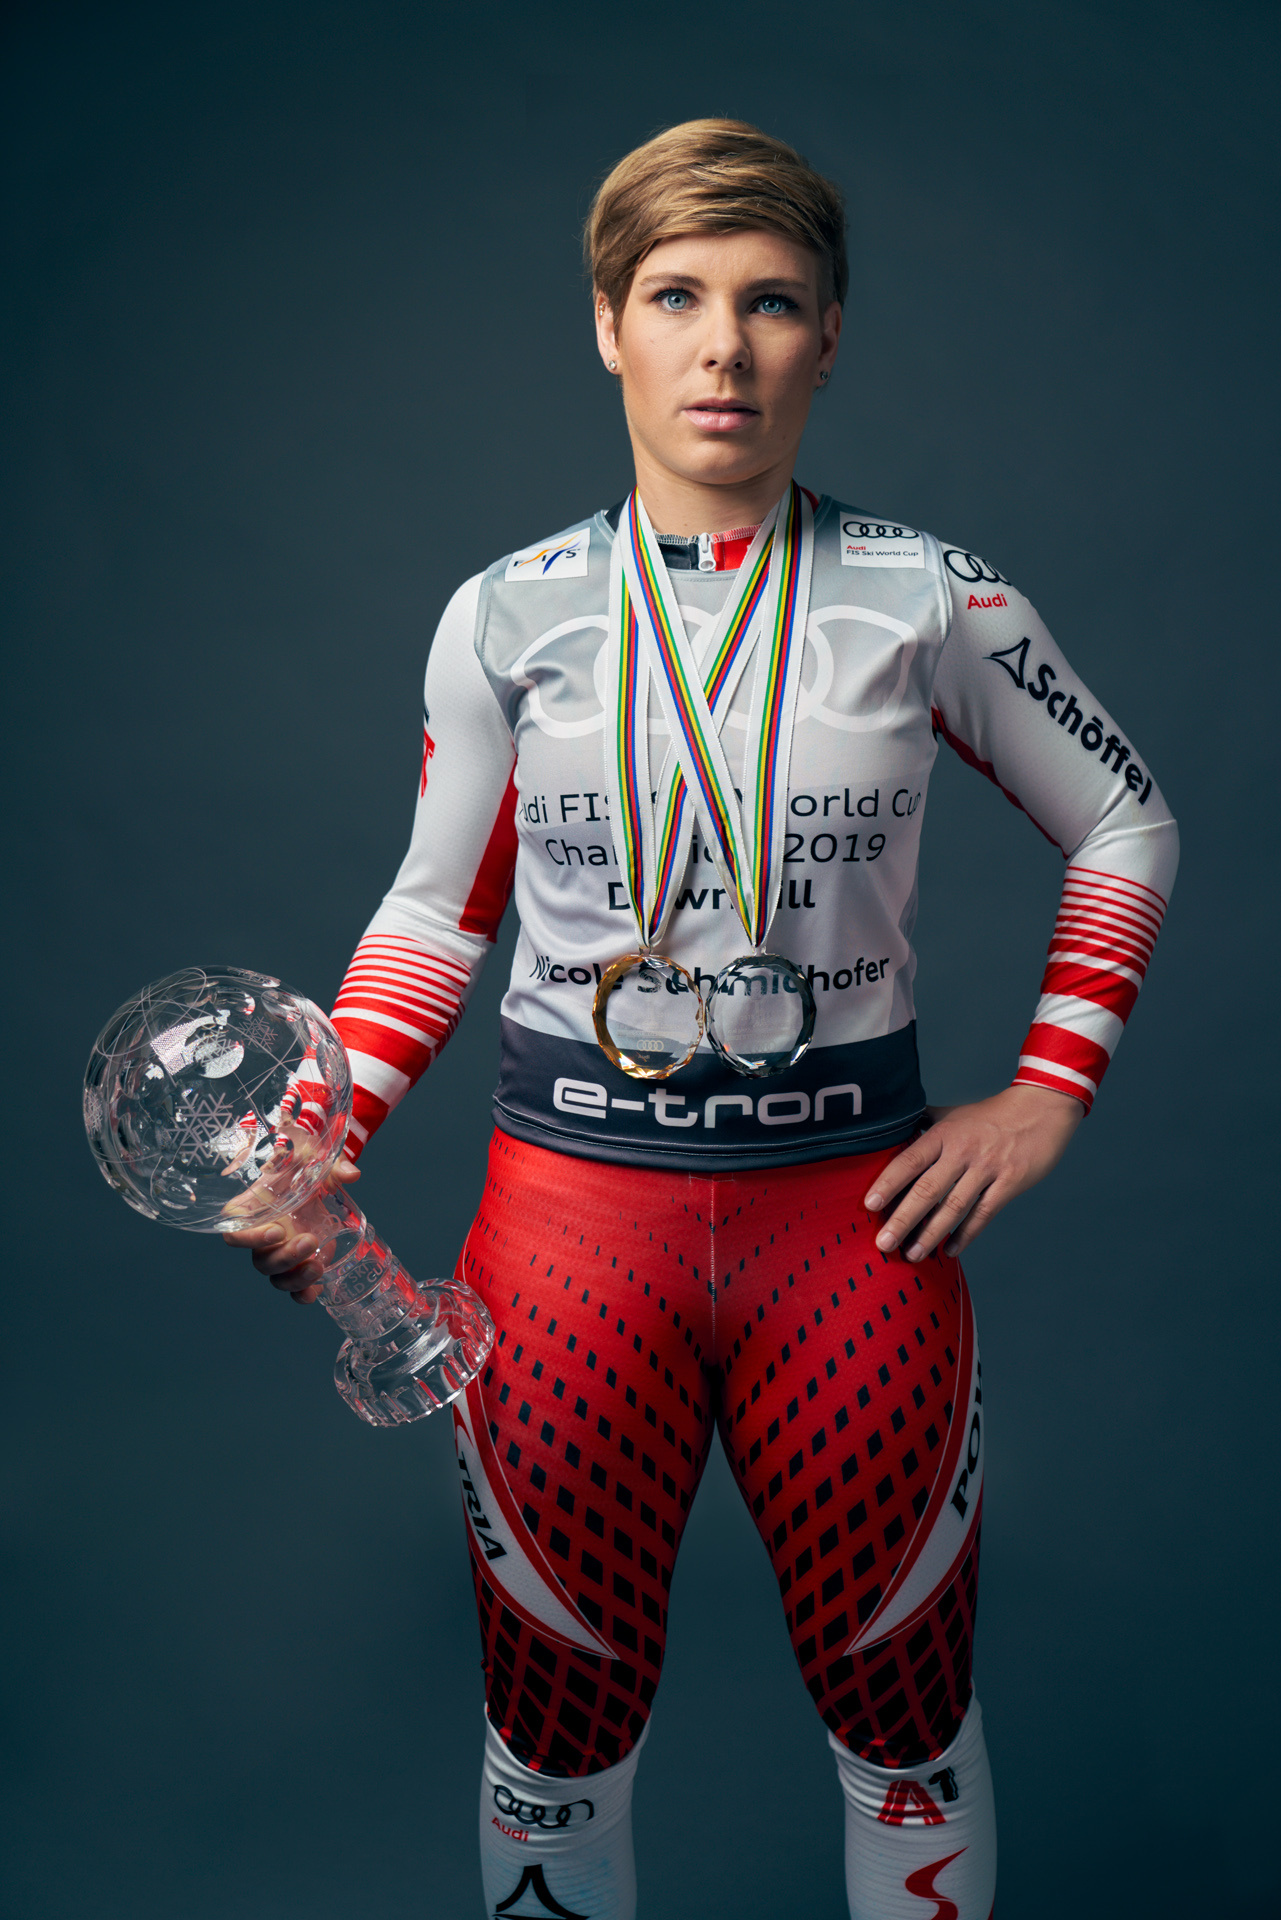 NicoleSchmidhofer / World champion alpine ski